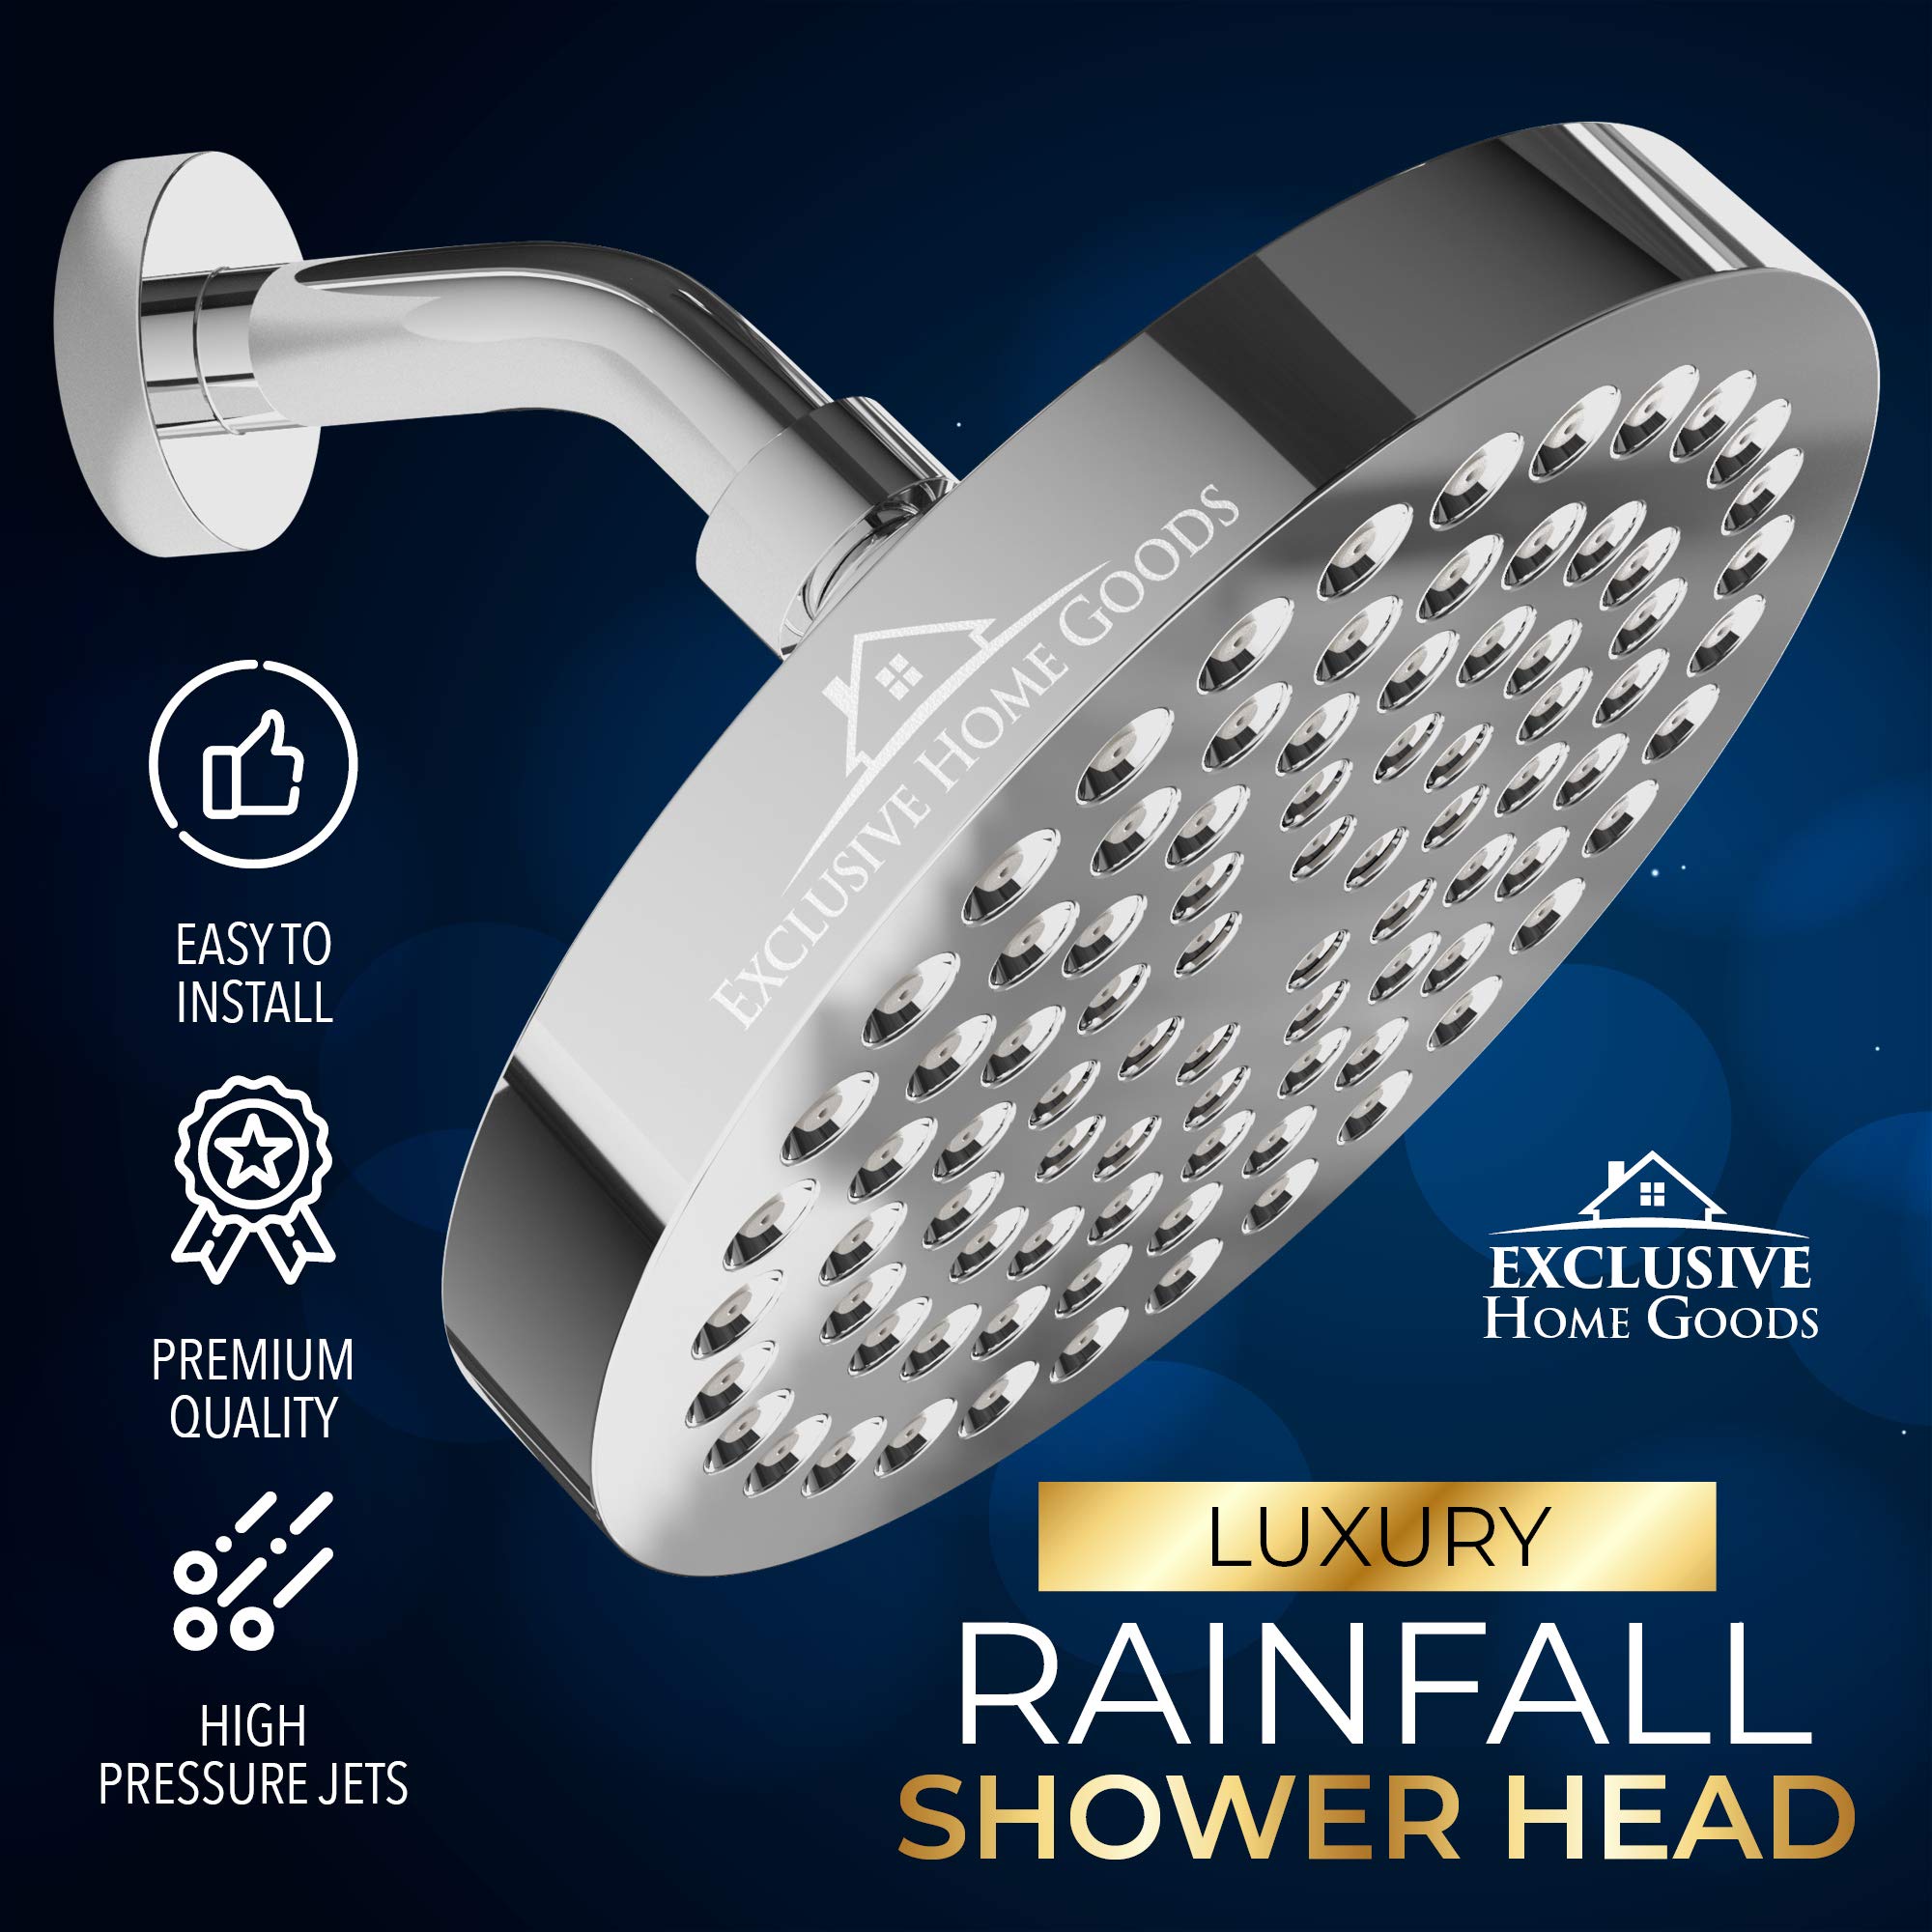 Heatsistence-Luxury Rainfall Shower Head - High-Pressure Showerhead Jets, Rain Shower Head Ant-Clog Silicone Nozzles (2.5 GPM, 6 Inch Diameter, Deluxe Chrome)  - Like New